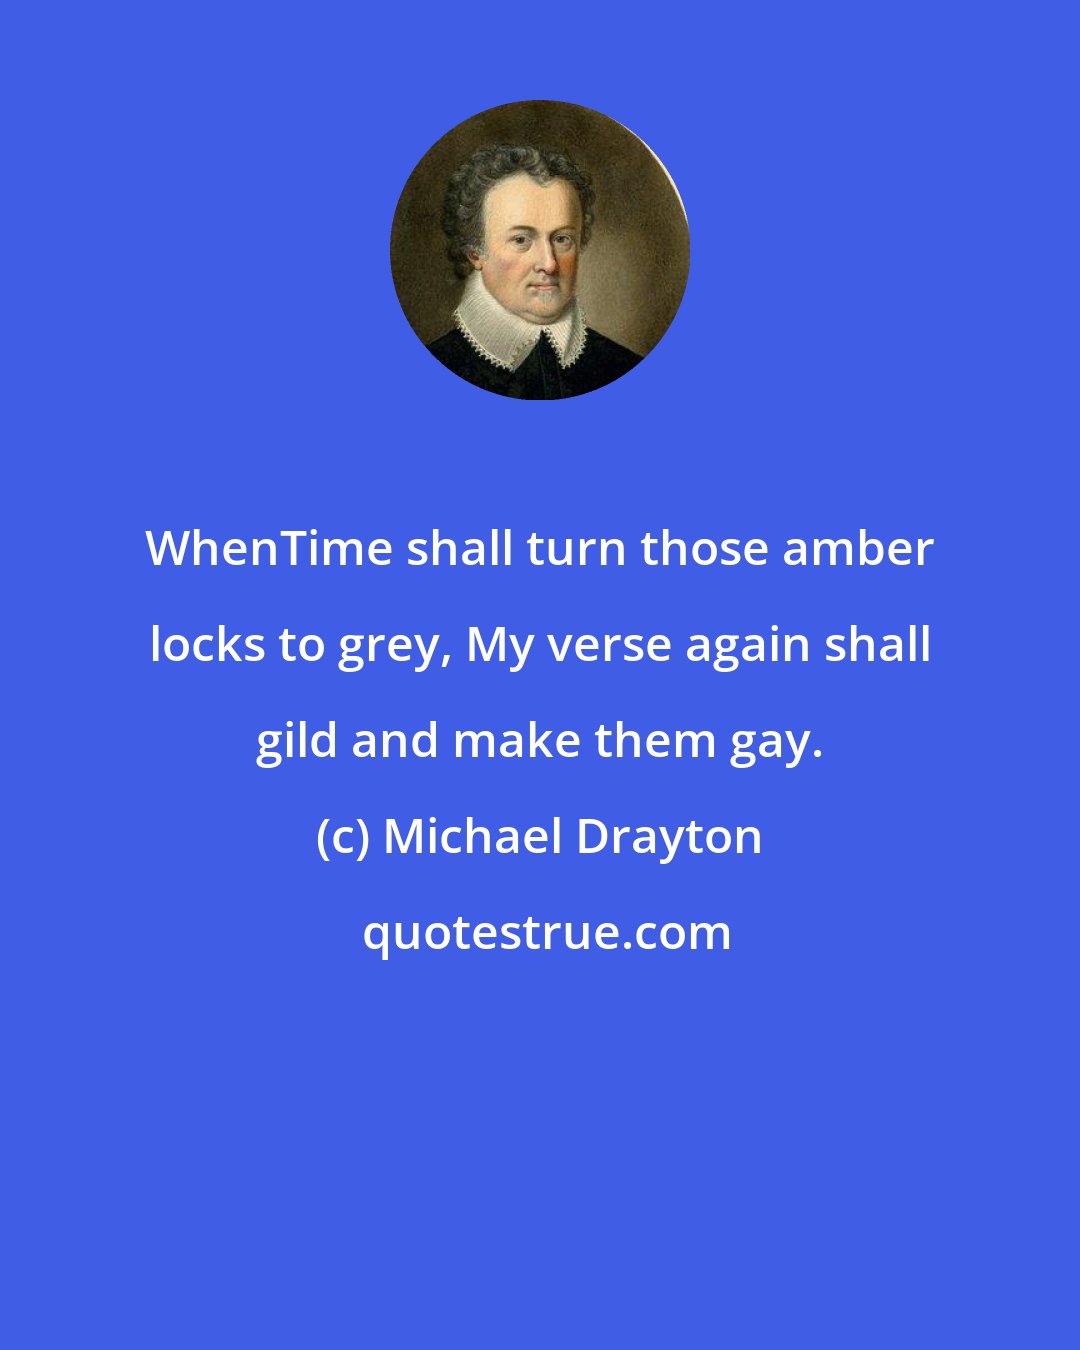 Michael Drayton: WhenTime shall turn those amber locks to grey, My verse again shall gild and make them gay.